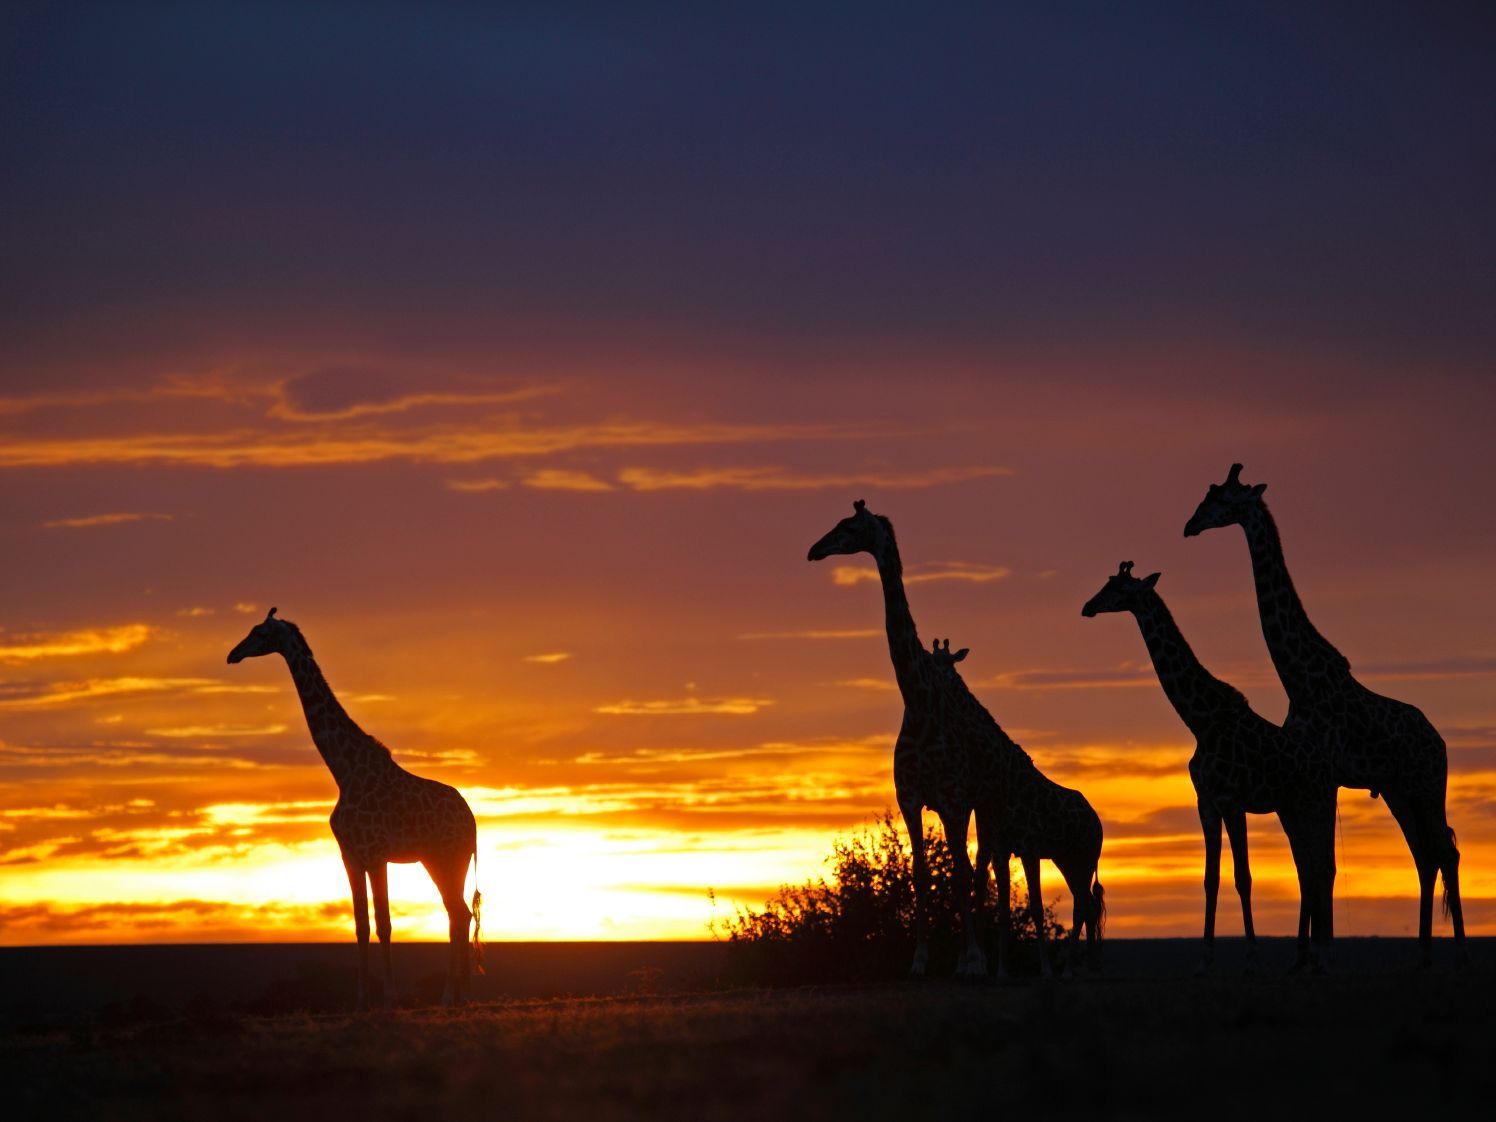 Giraffes at sunset on the African savannah.